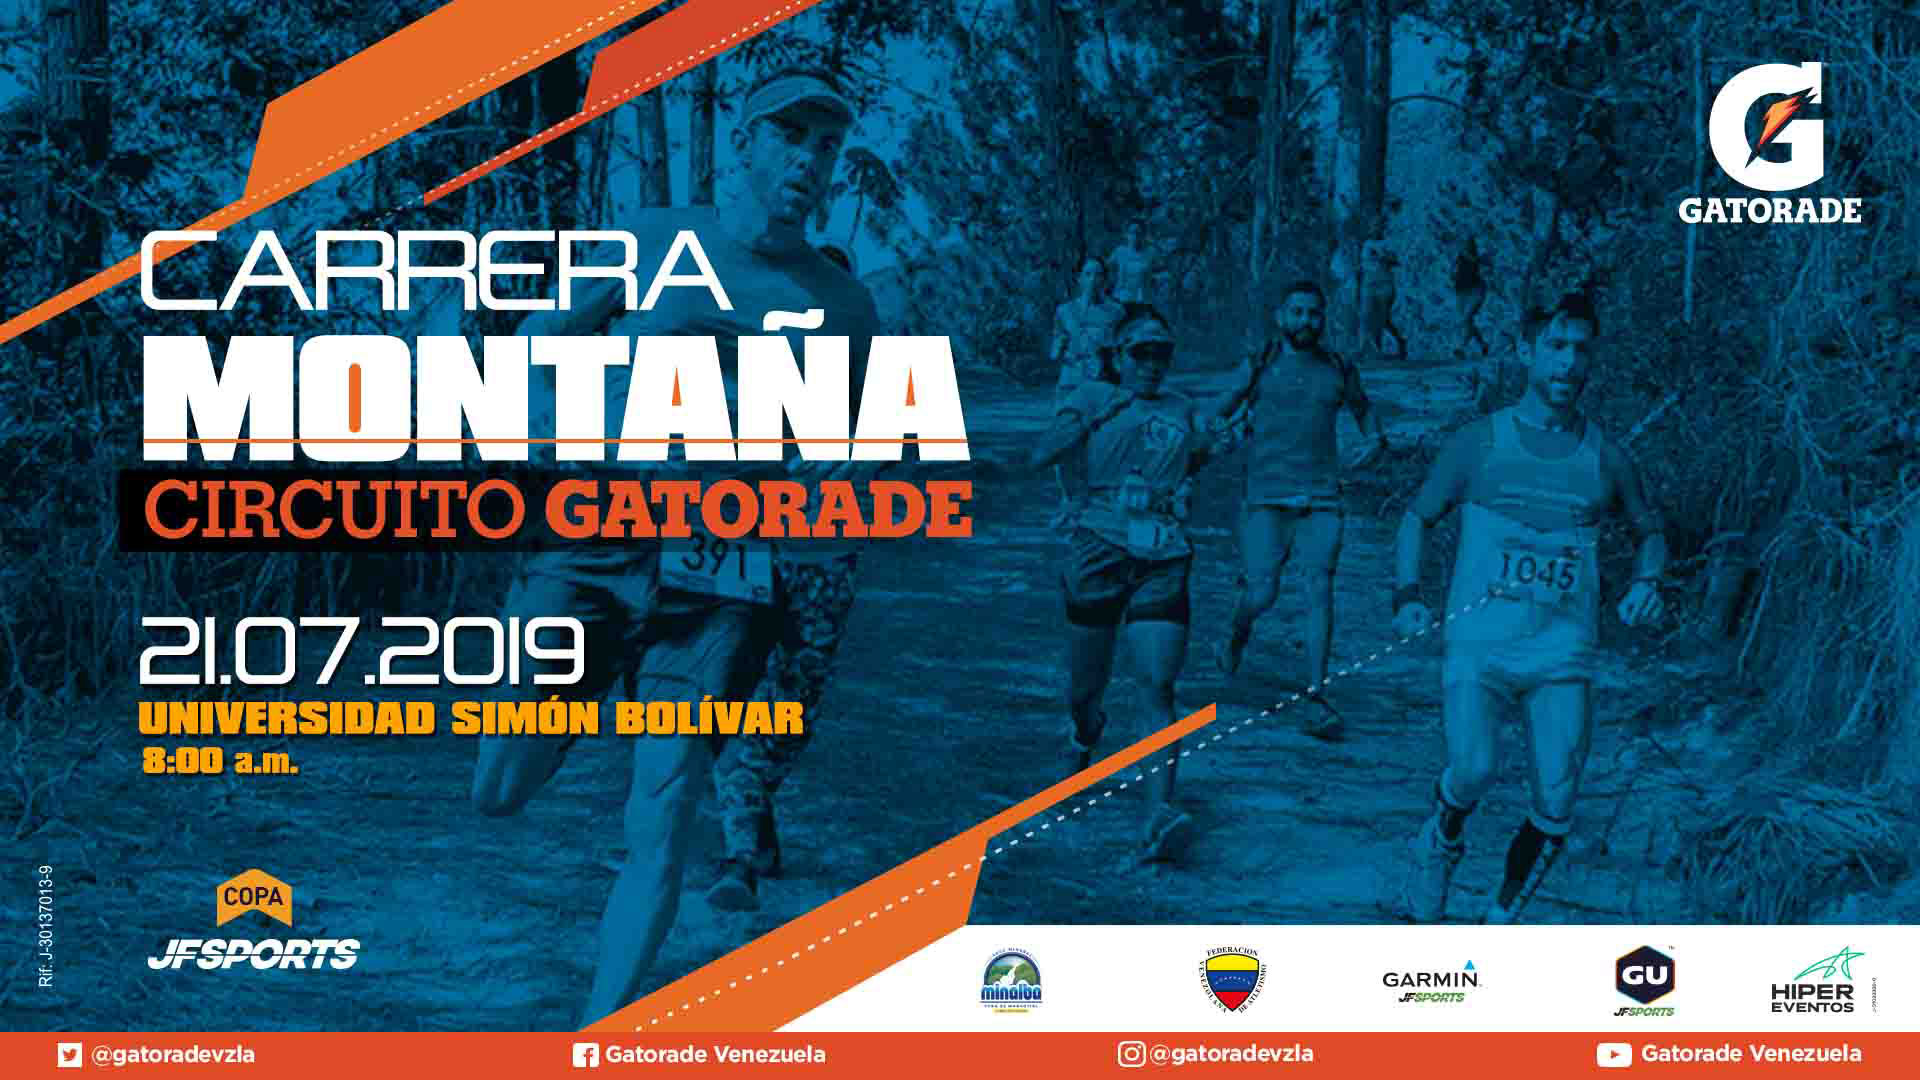 Carrera de Montaña Gatorade 2019 - Copa JFSports